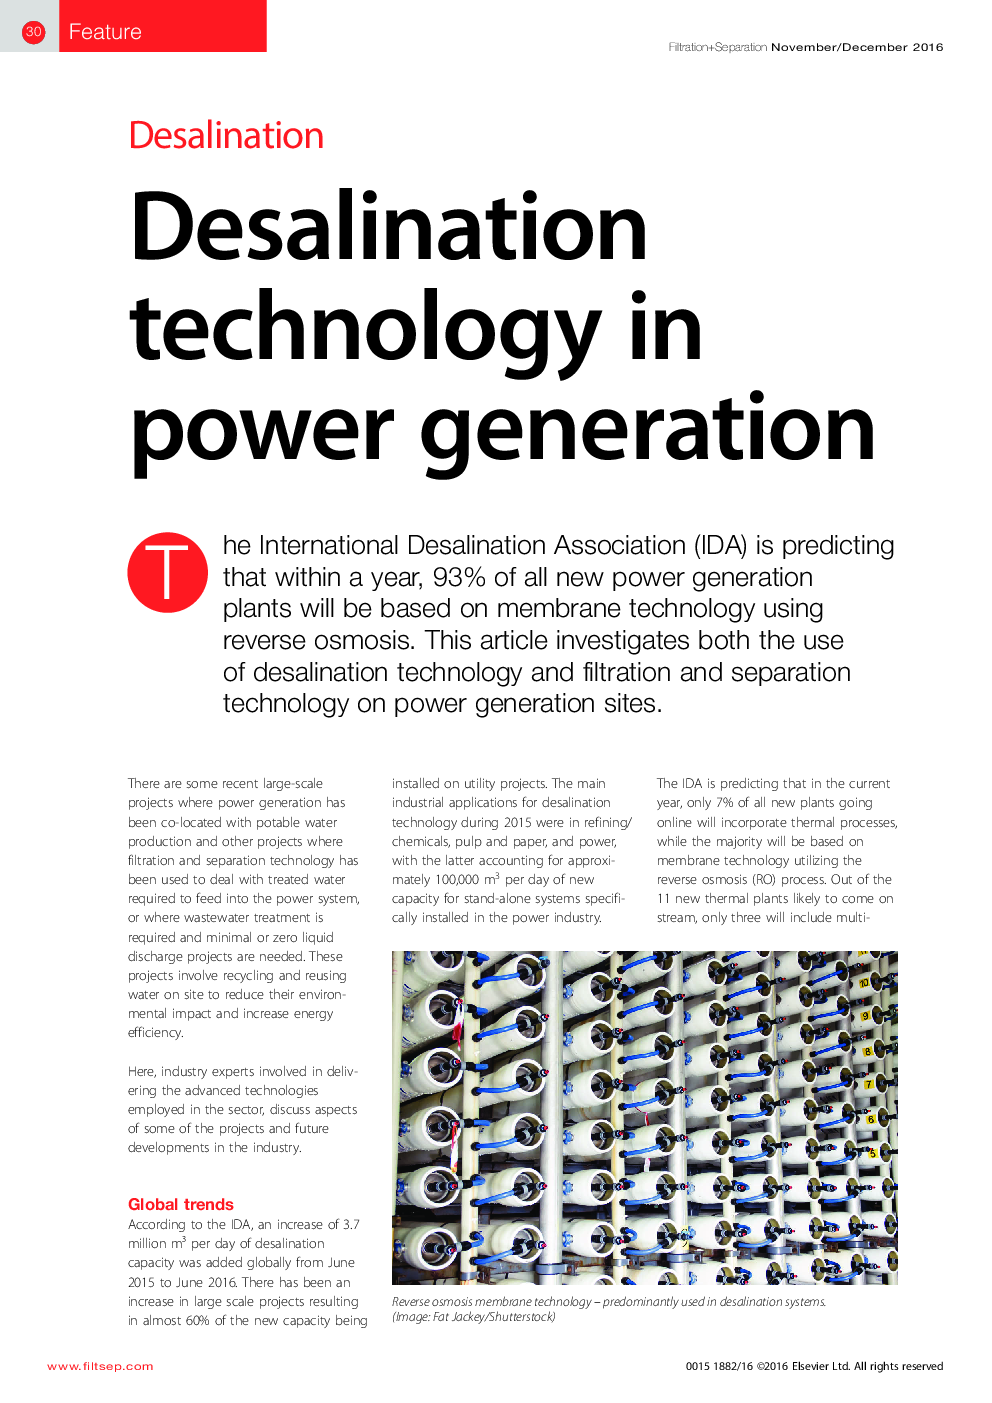 Desalination technology in power generation